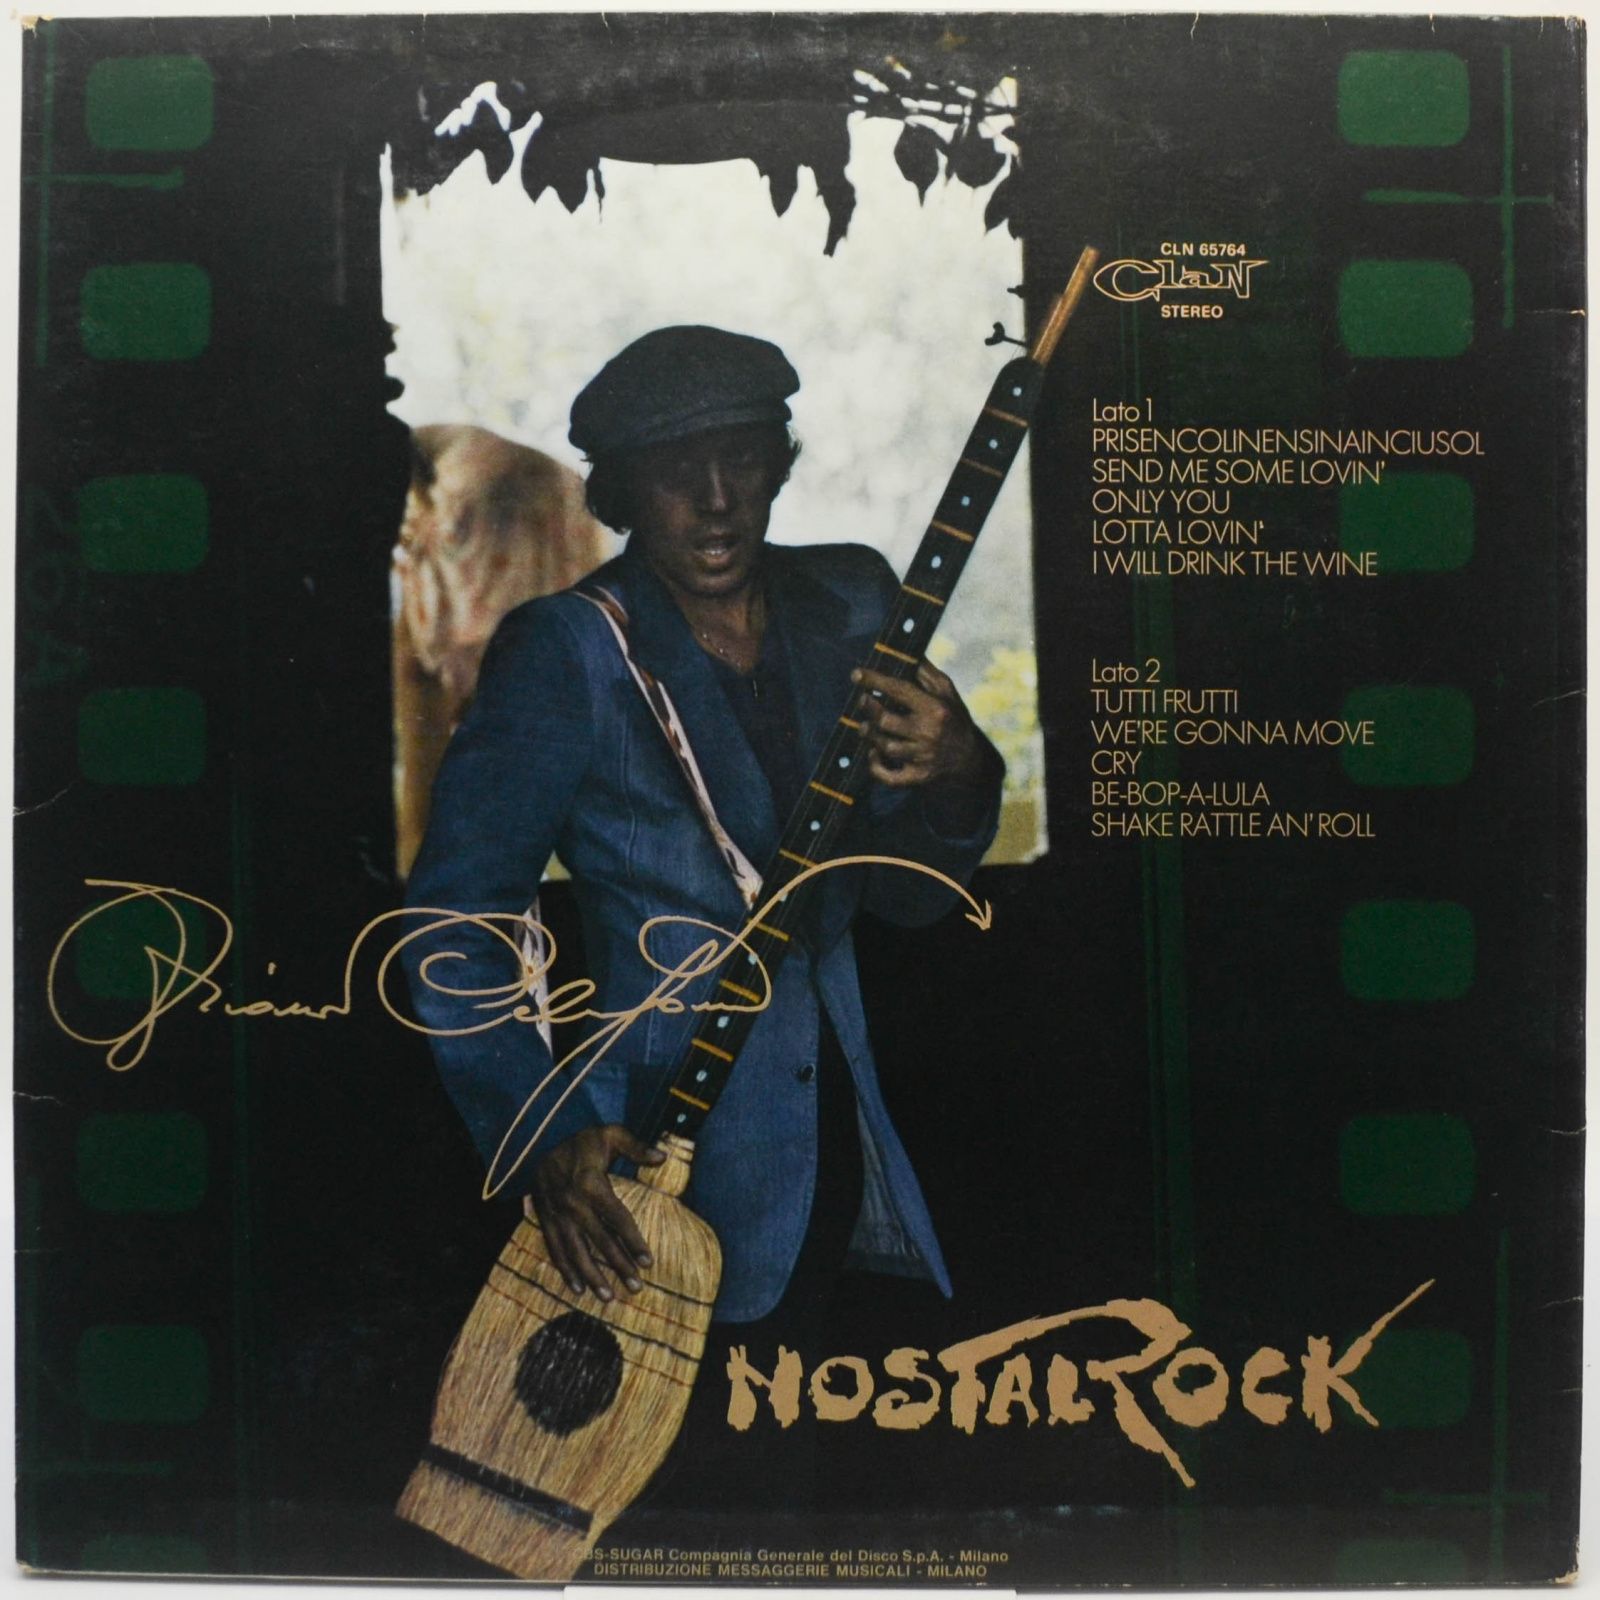 Adriano Celentano — Nostalrock (1-st, Italy, Clan), 1973